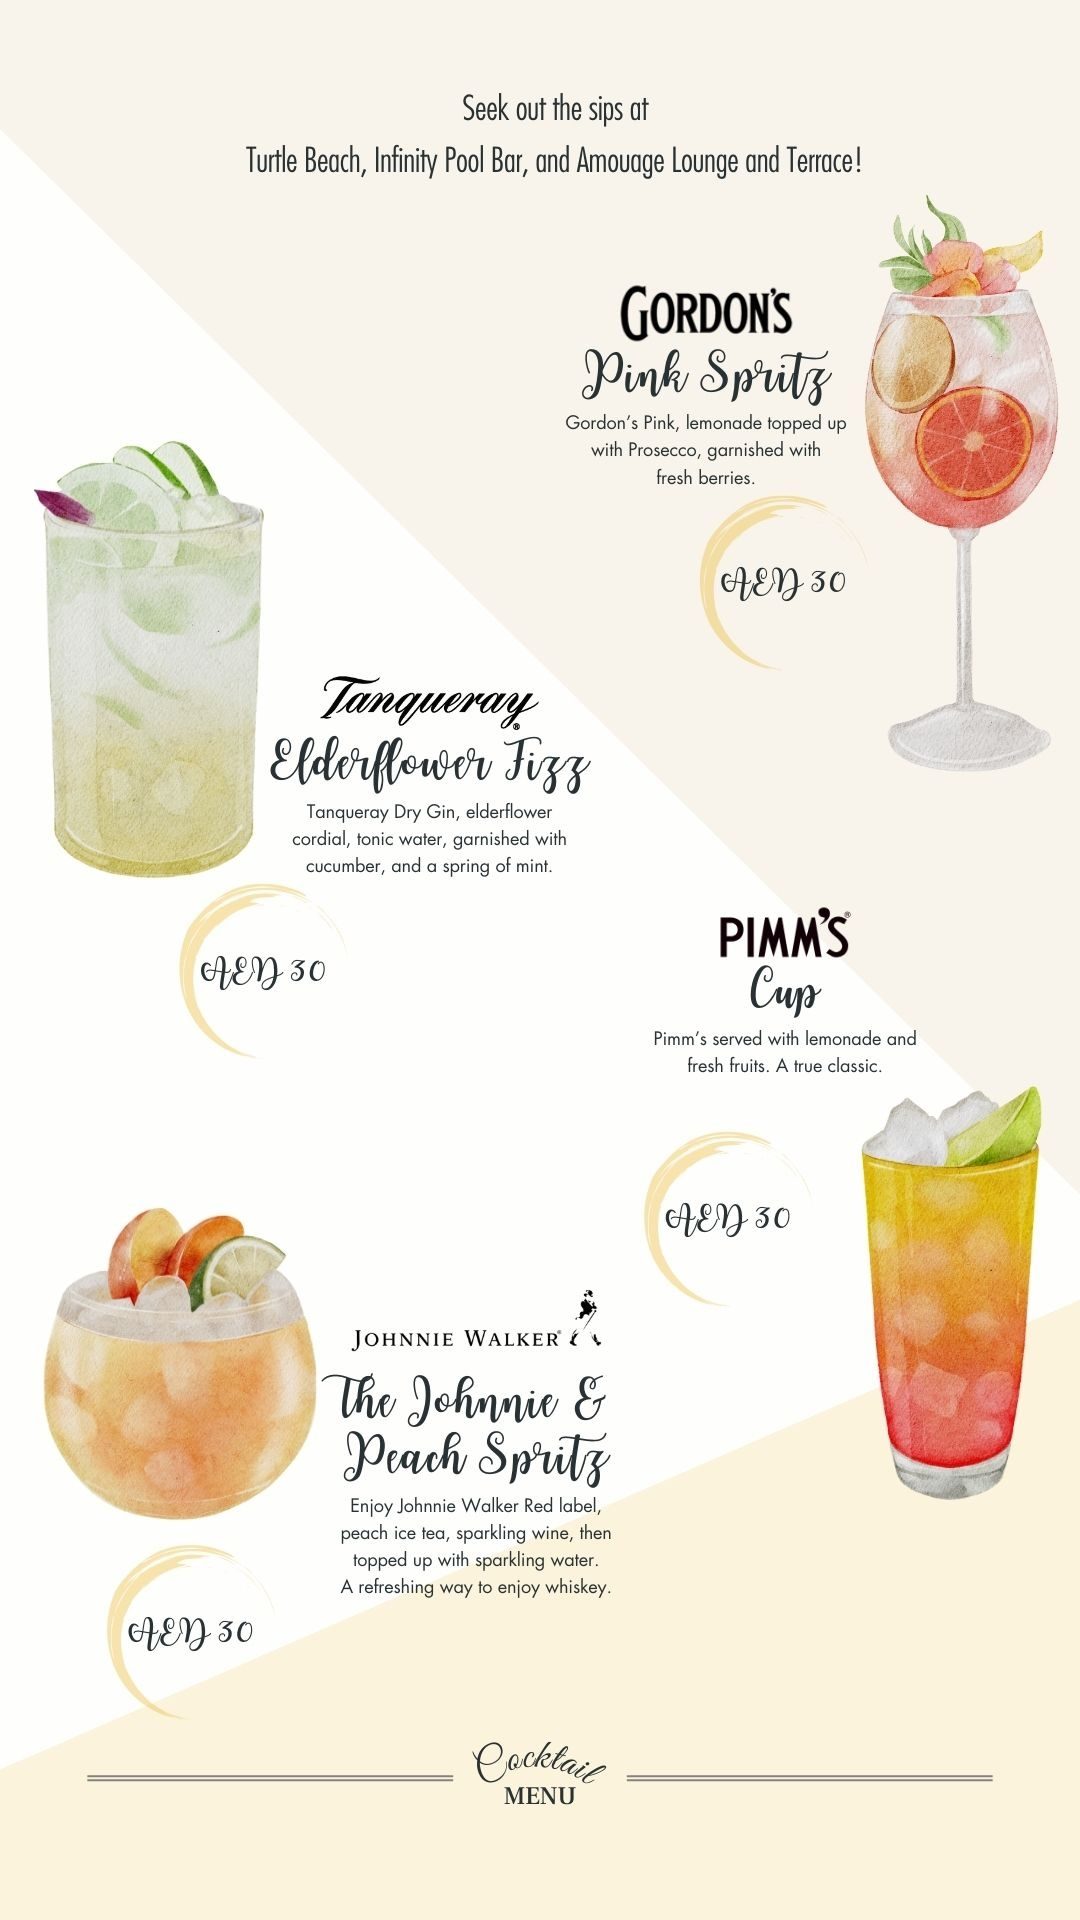 cheers-to-savings-shisha-cocktail-offers-at-amouage-lounge